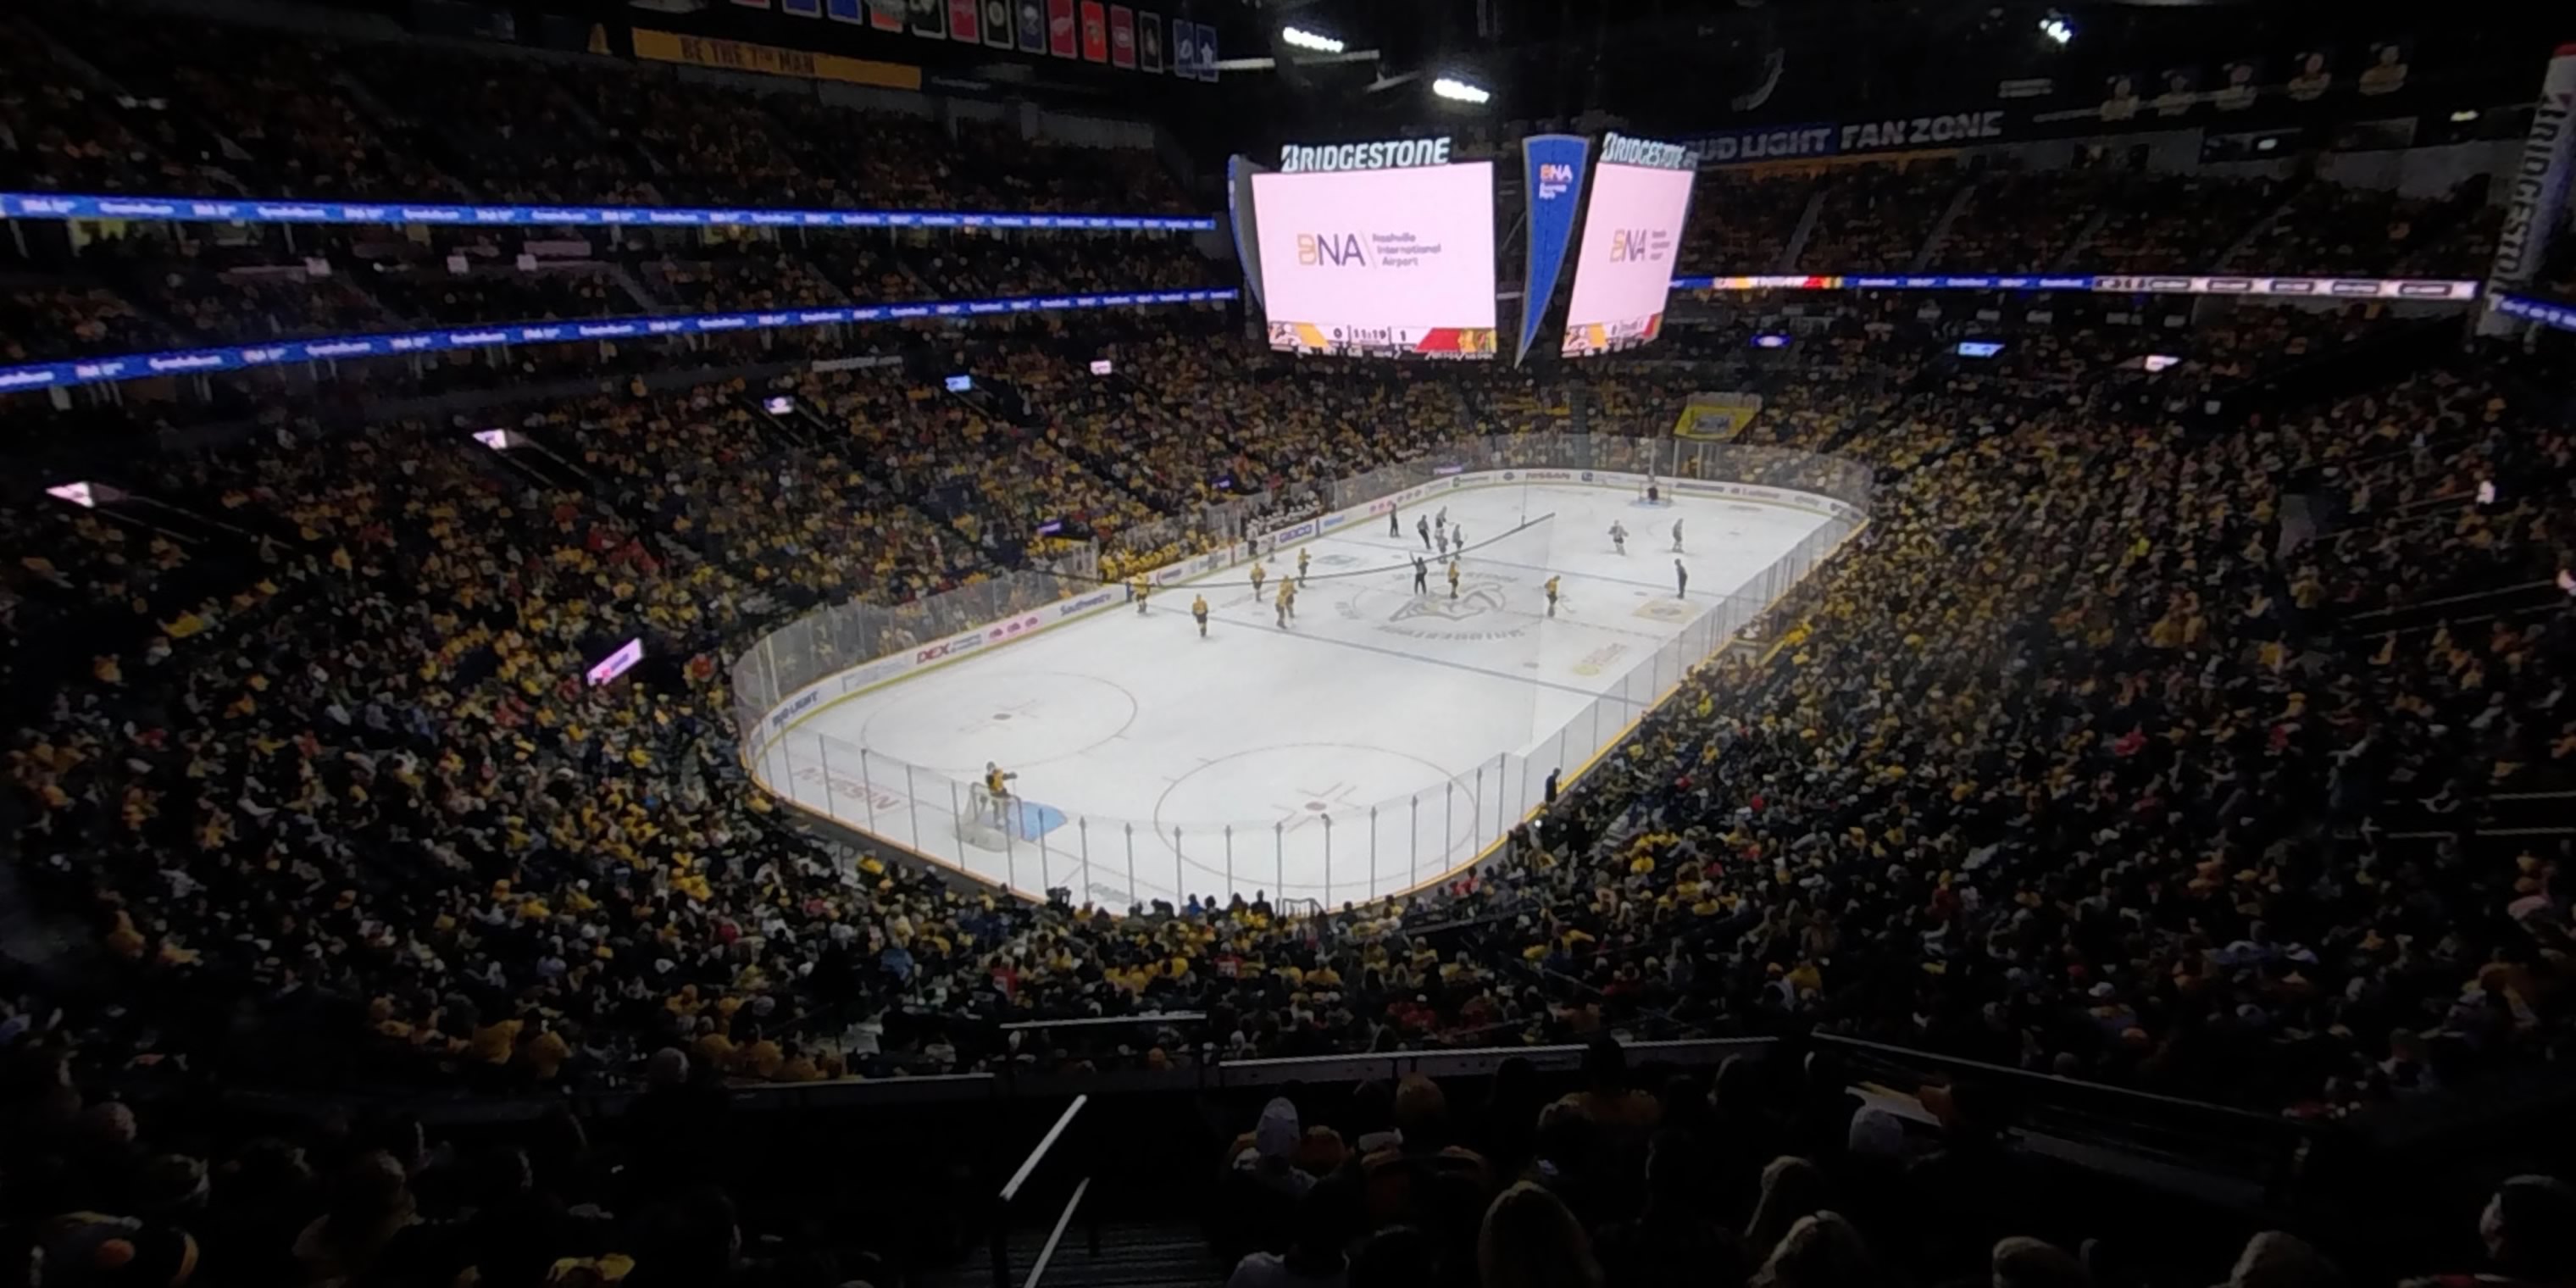 section 203 panoramic seat view  for hockey - bridgestone arena